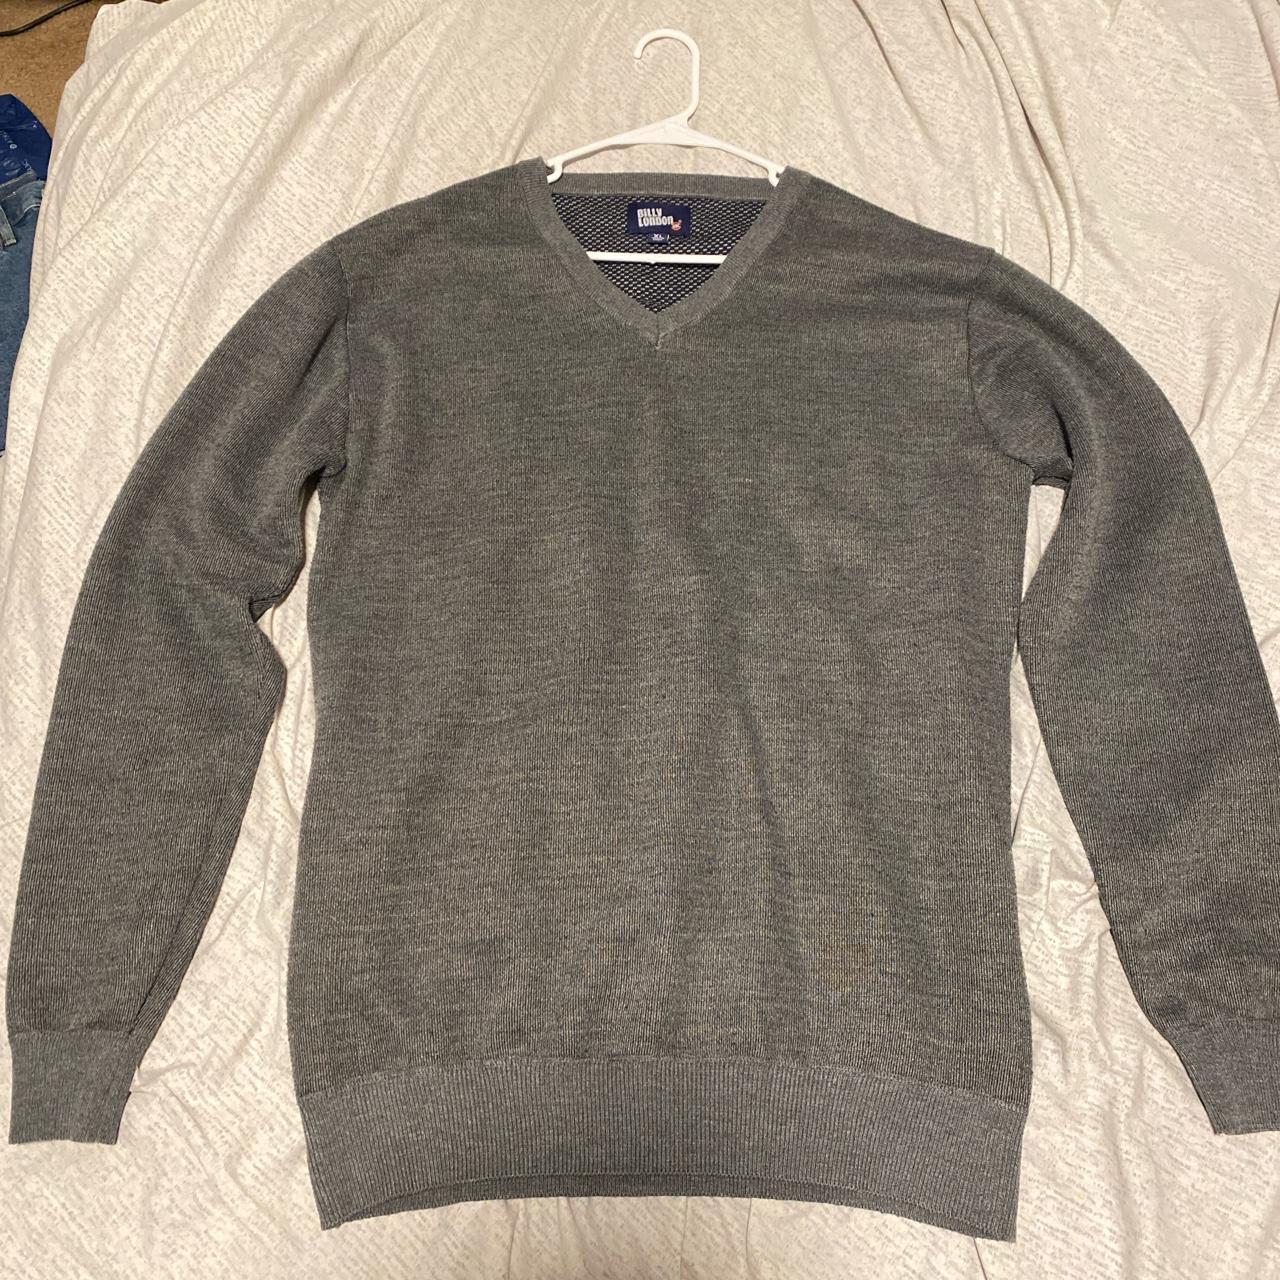 Product Image 1 - v-neck grey grandpa sweater
brand:billy london
width: